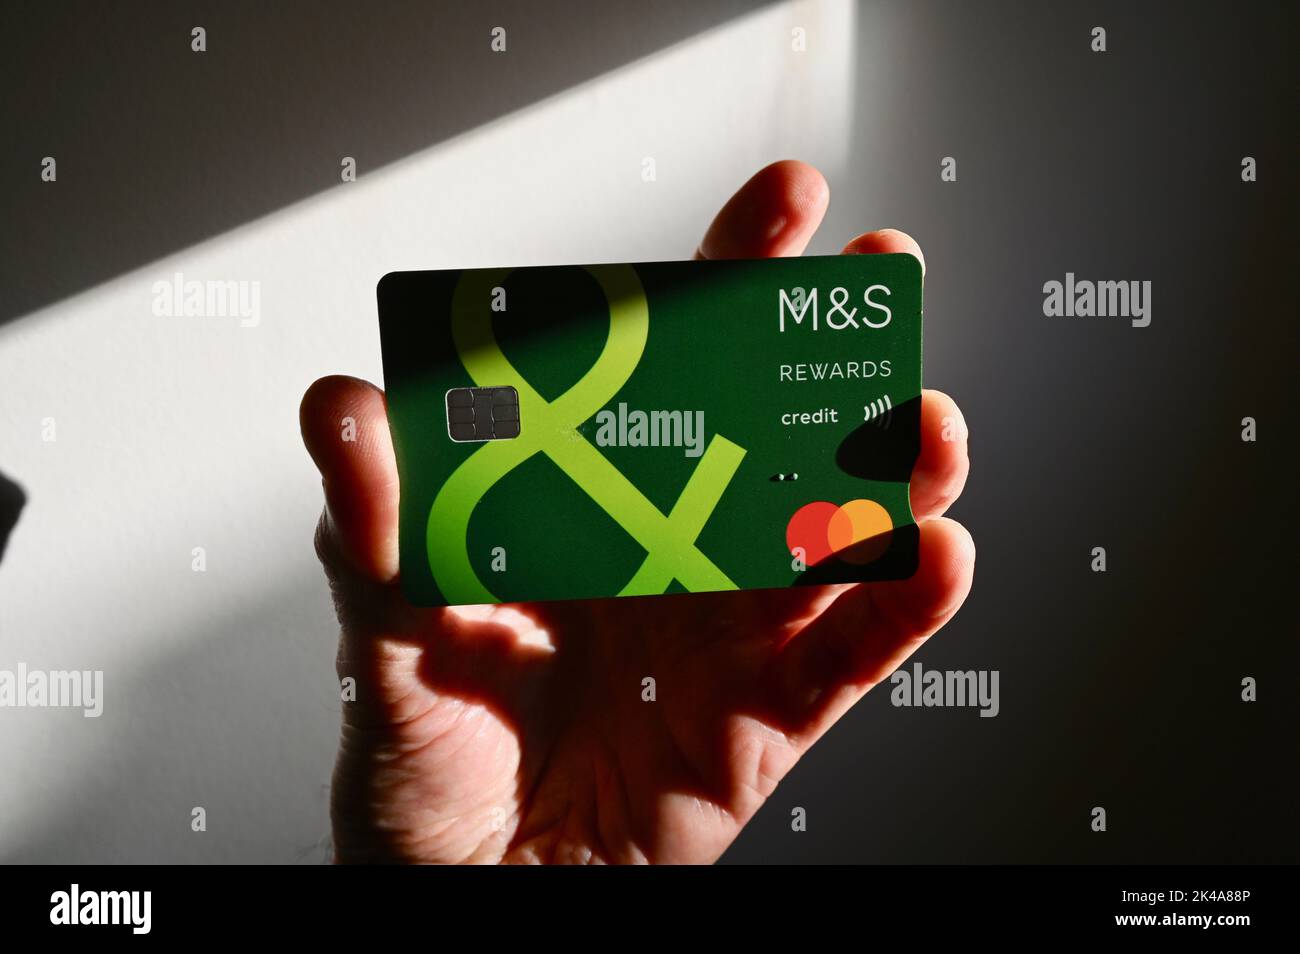 M&S Rewards Card Stock Photo